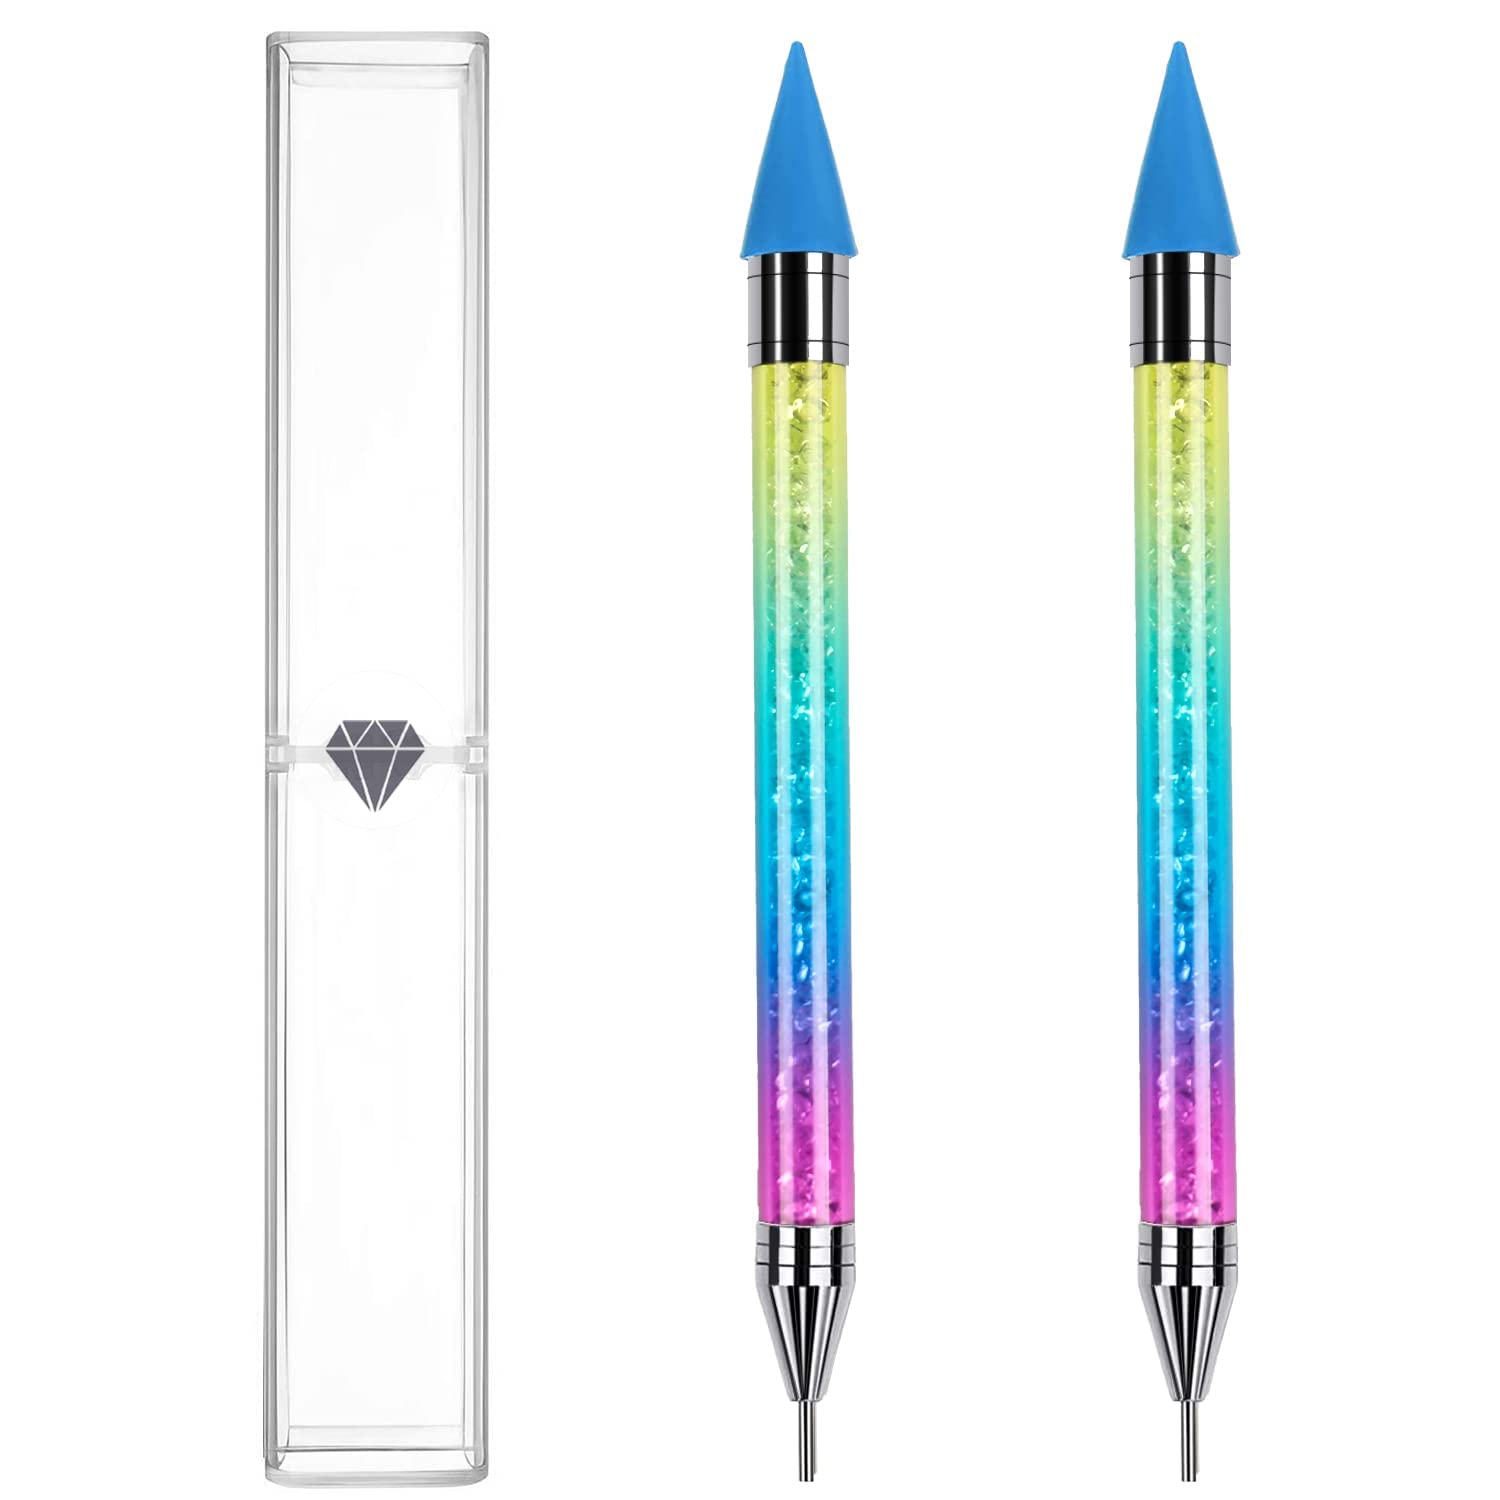 Nail Rhinestones Picker Dotting Pen, Upgrade Dual-Ended Wax Pencil